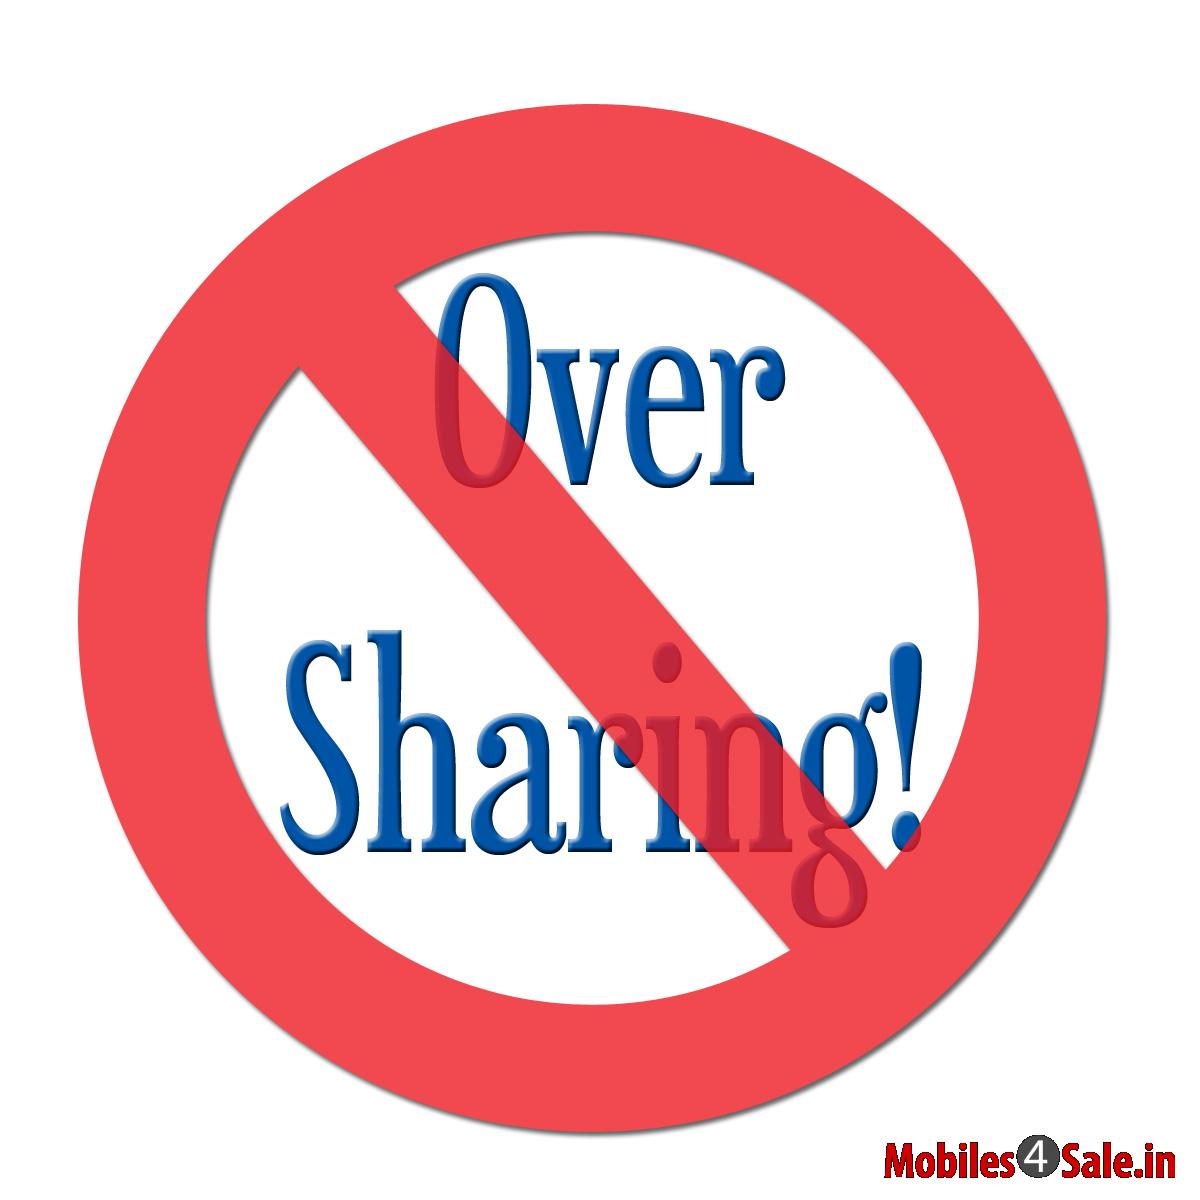 No Over Sharing